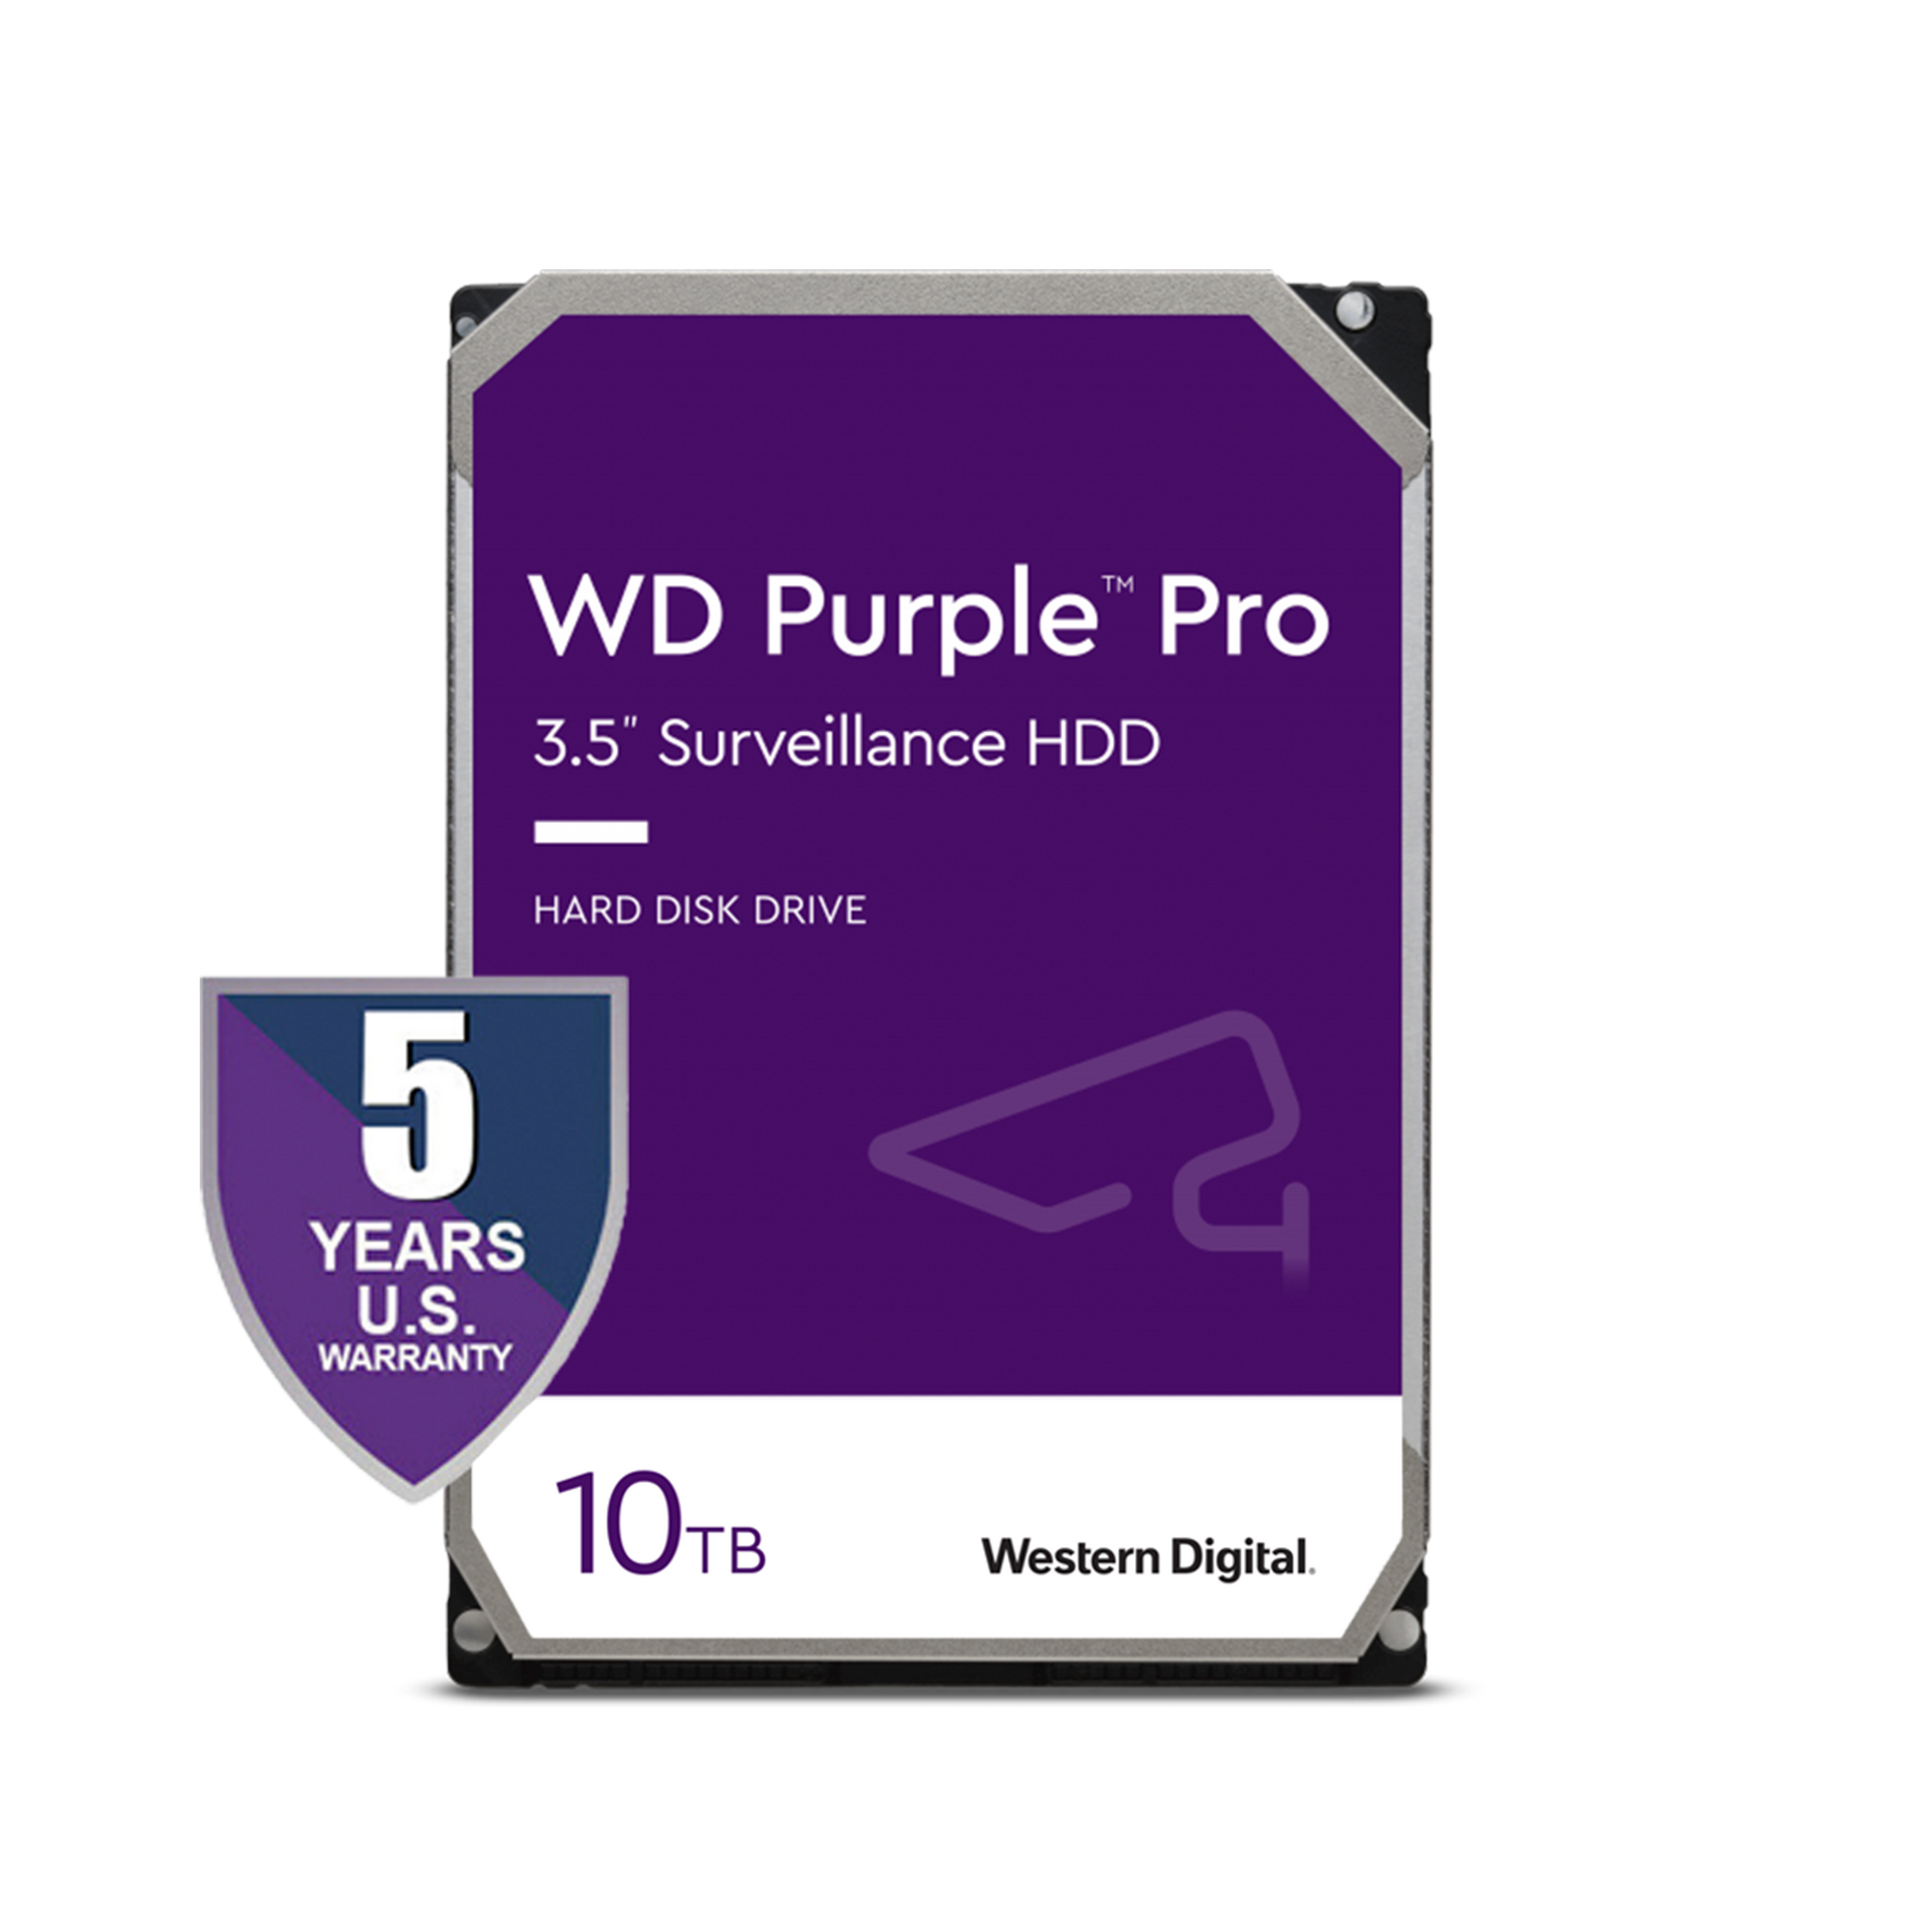 WD Purple Pro Surveillance Hard Drive 10TB Main